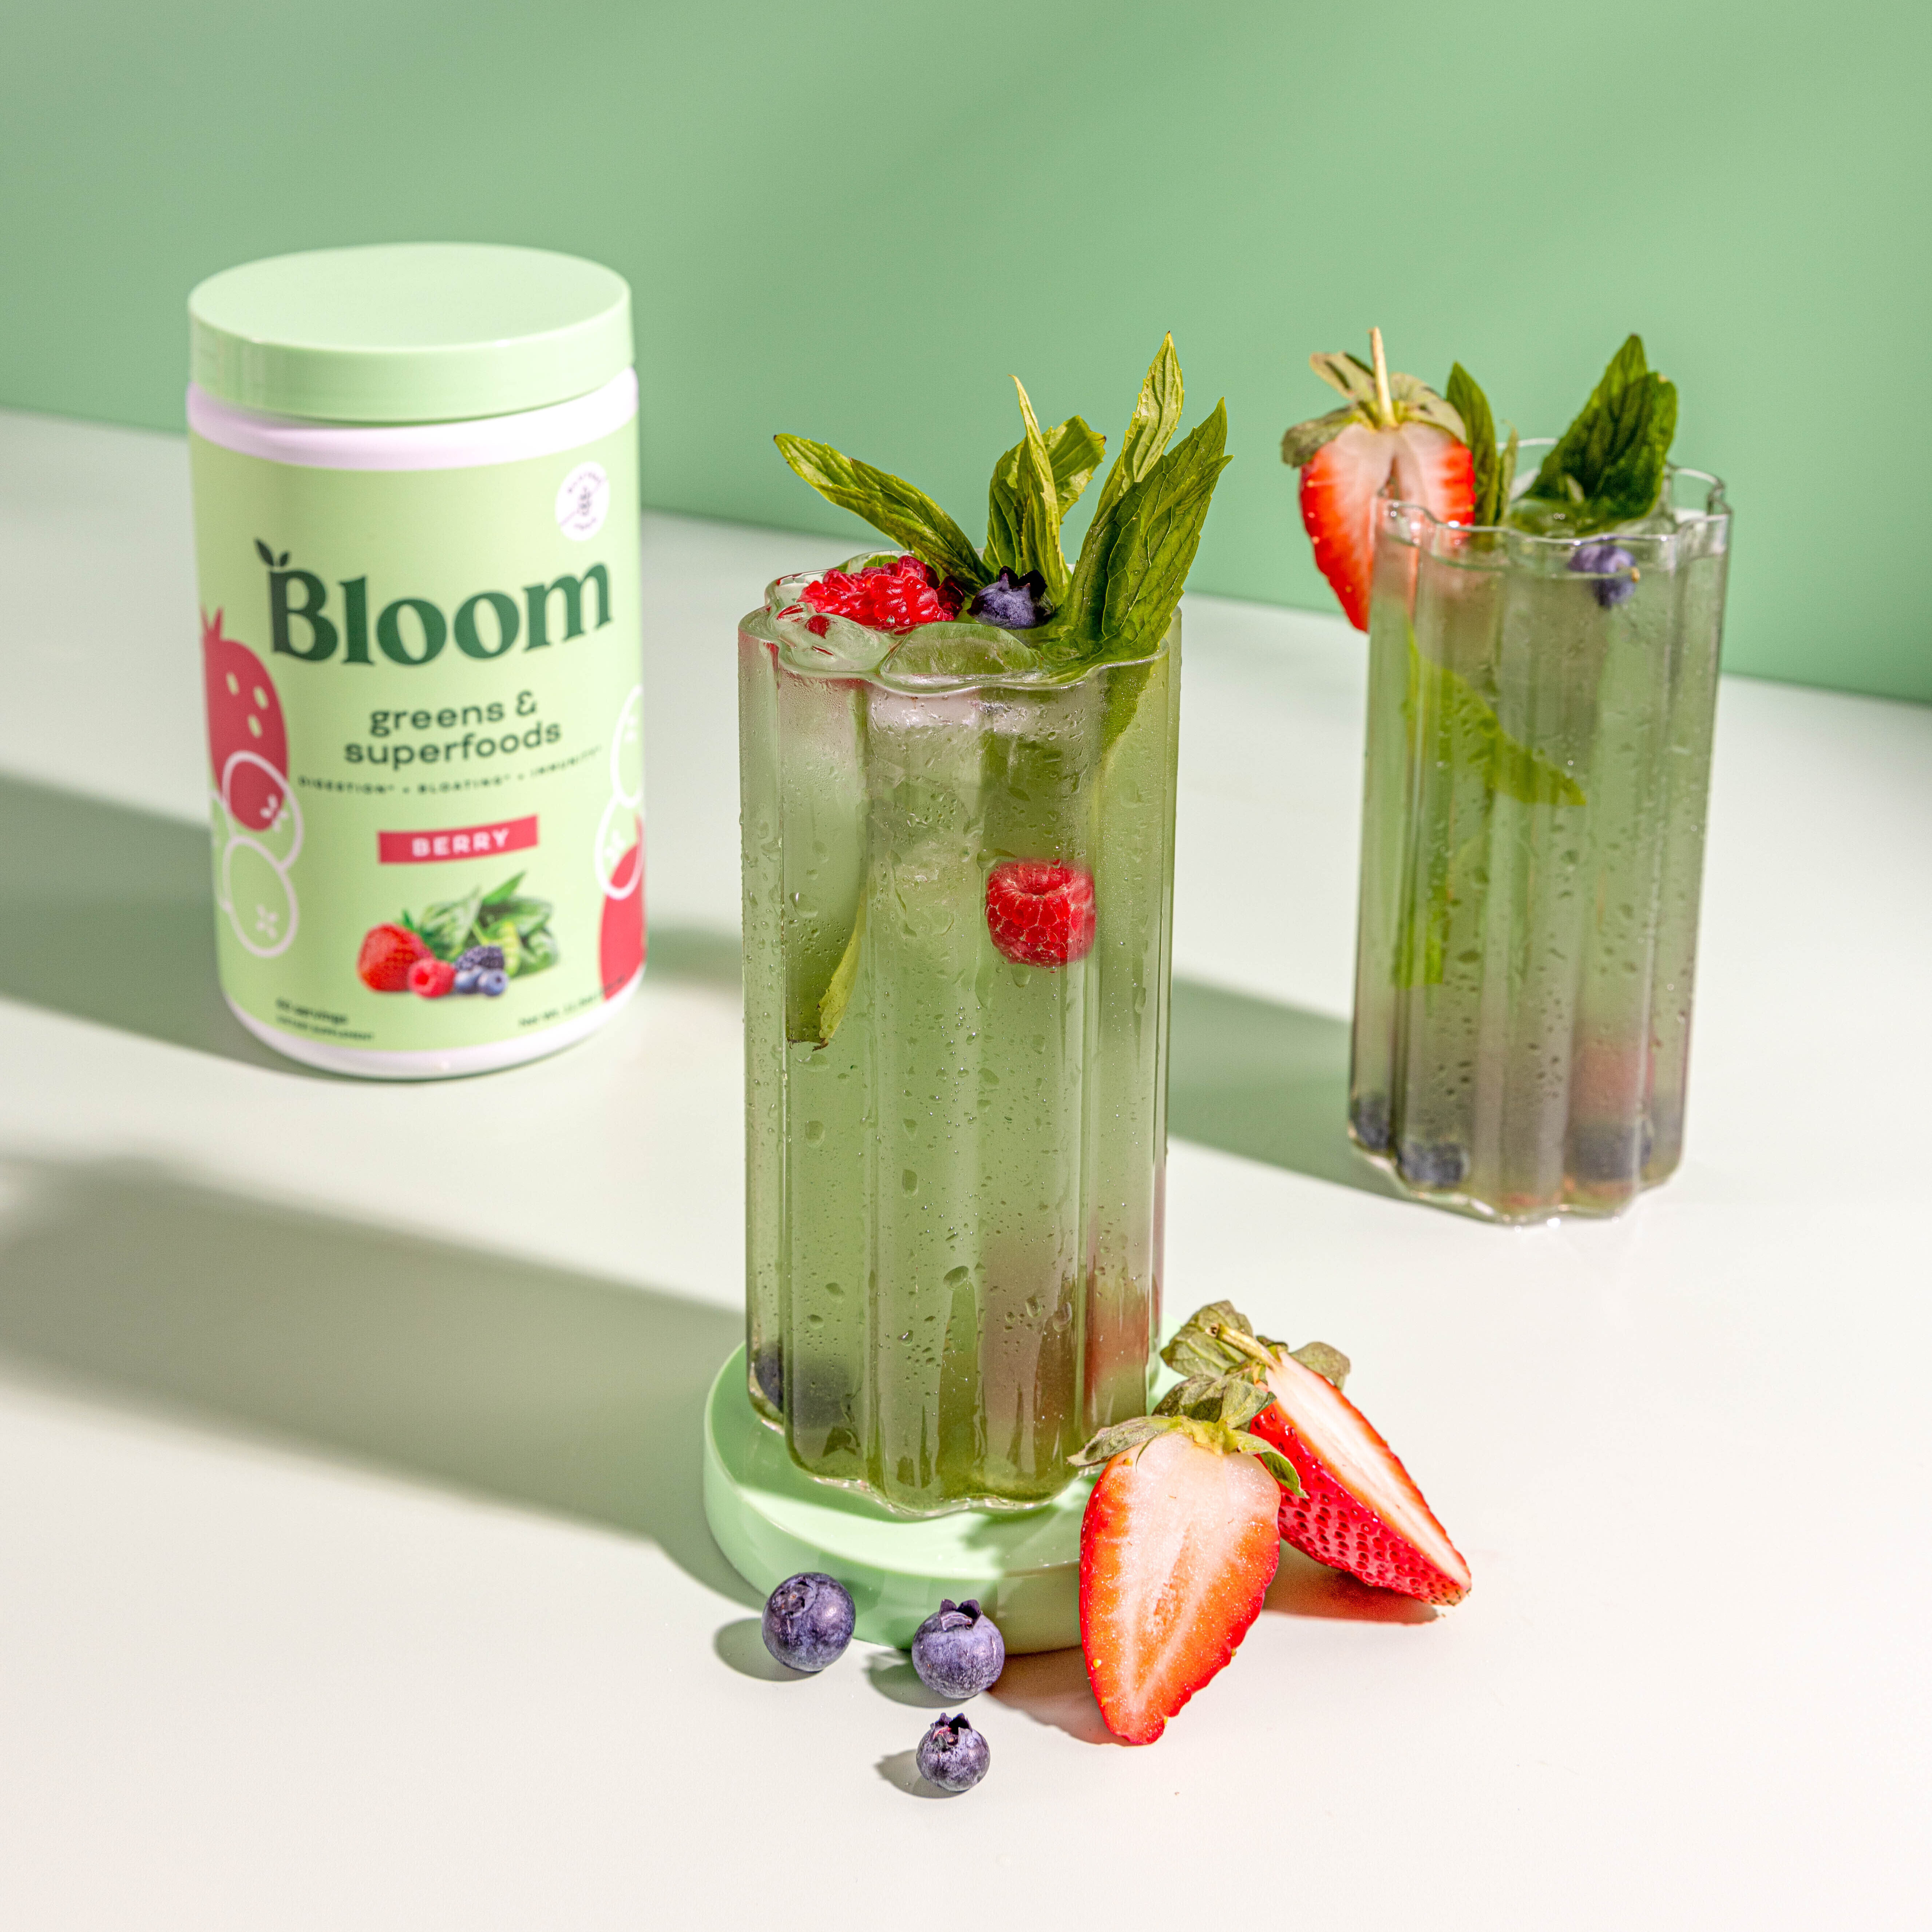 Bloom Nutrition Review  The Best TikTok Health Brand